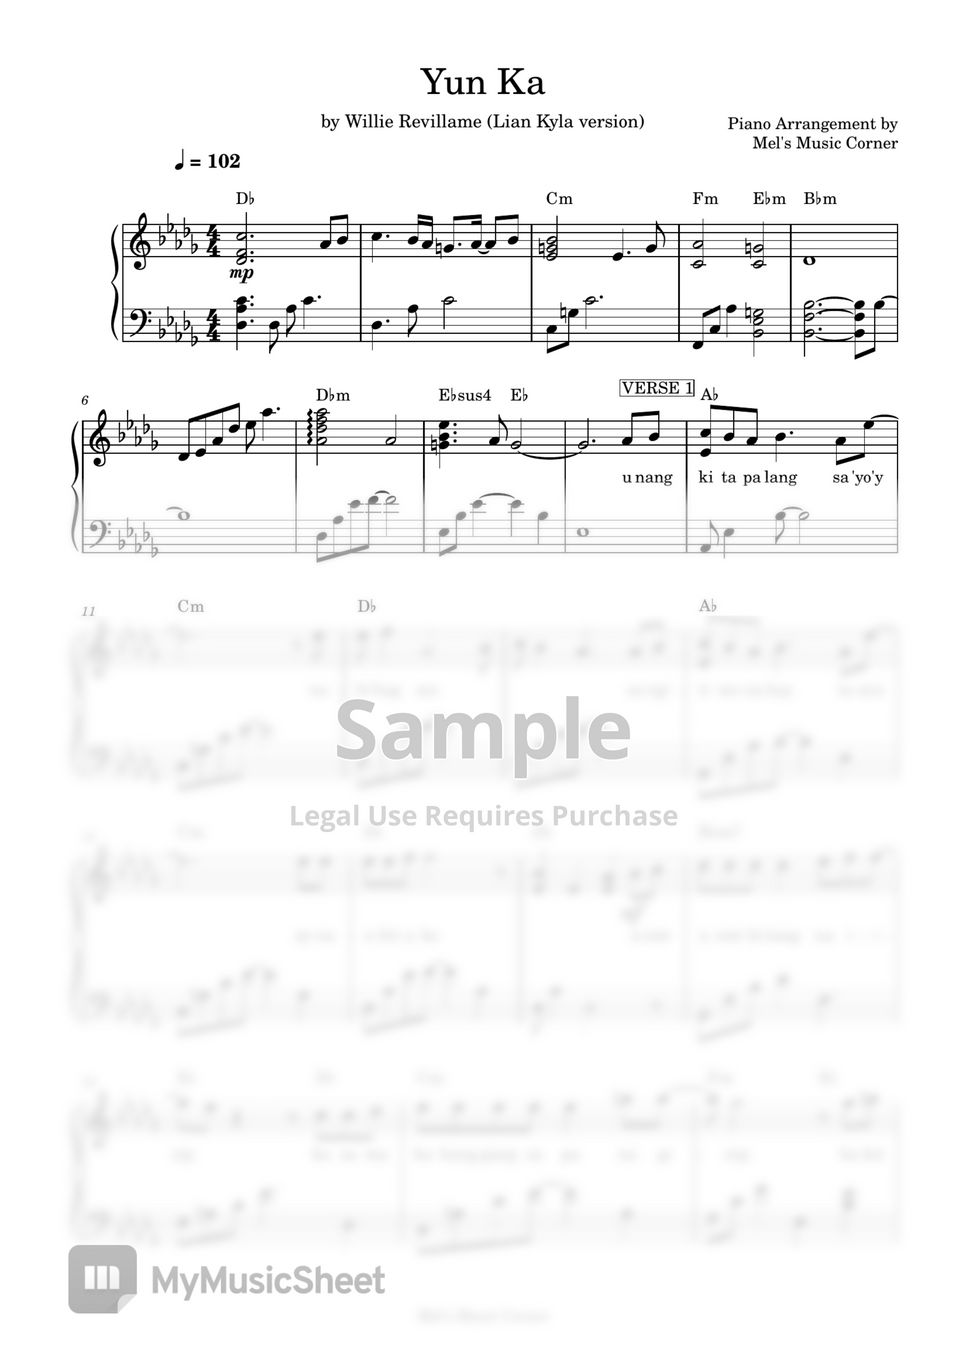 Wille Revillame (Lian Kyla version) - Yun Ka (piano sheet music) by Mel's Music Corner